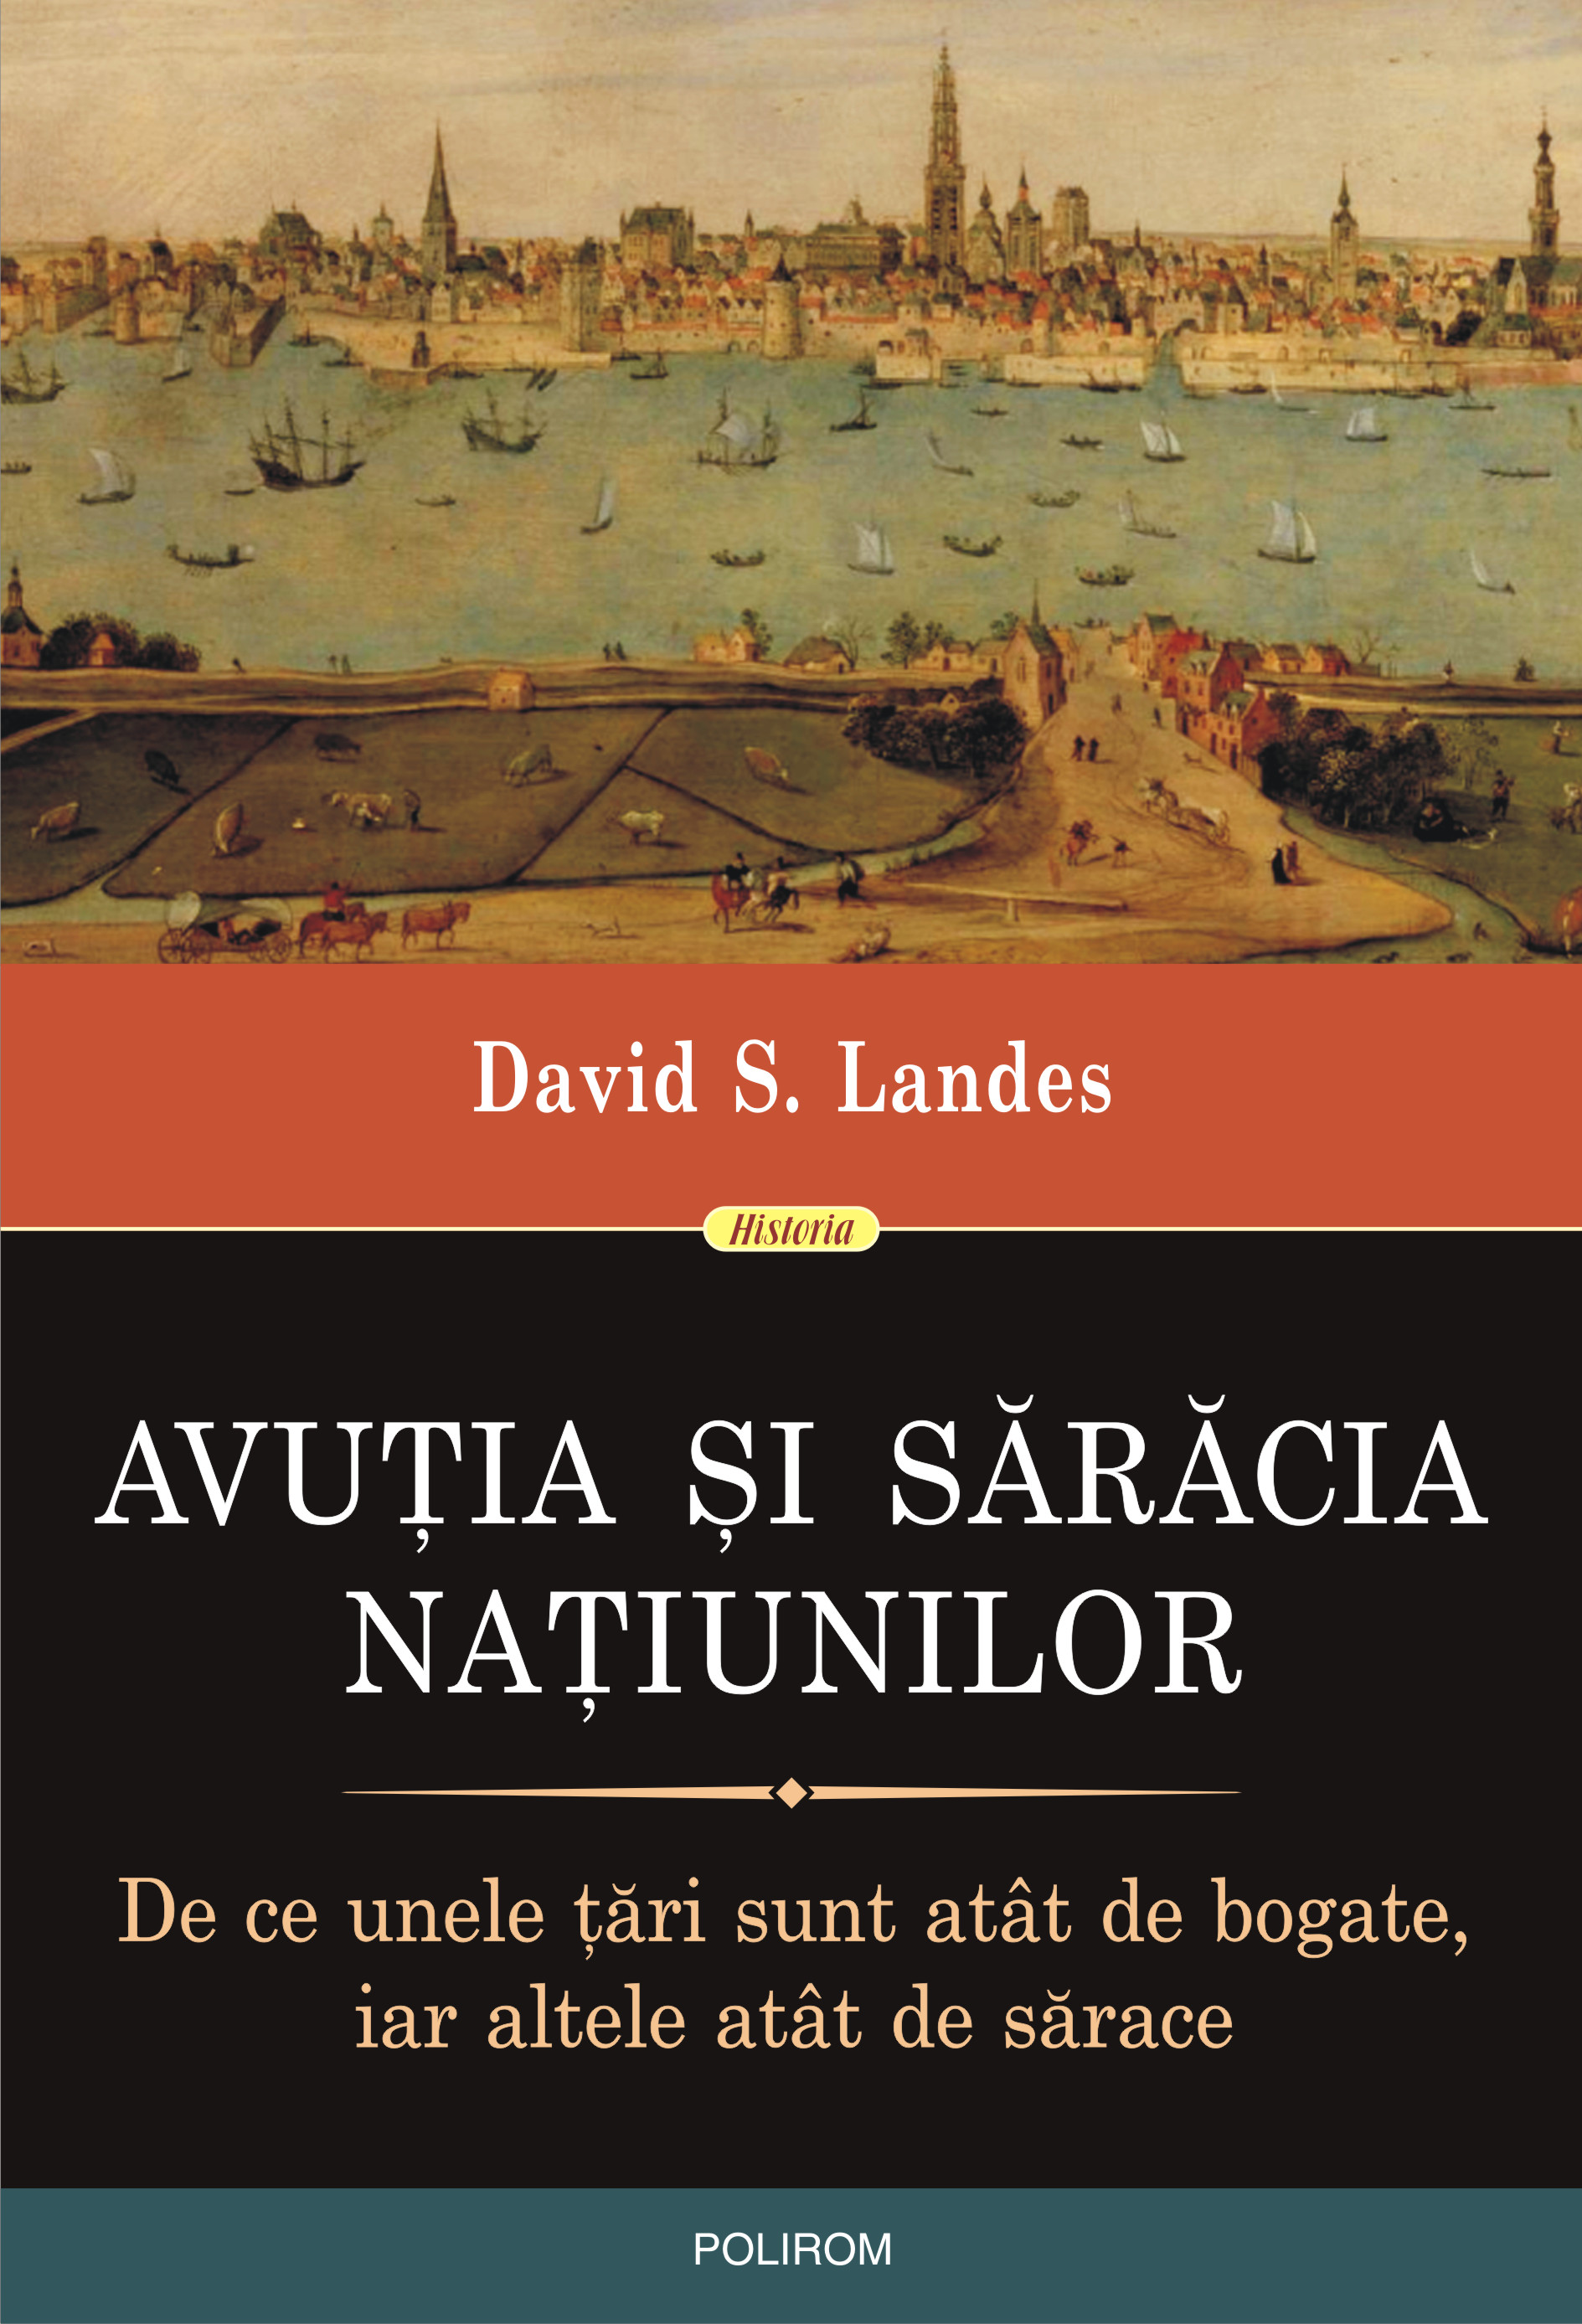 eBook Avutia si saracia natiunilor - Davides Landes